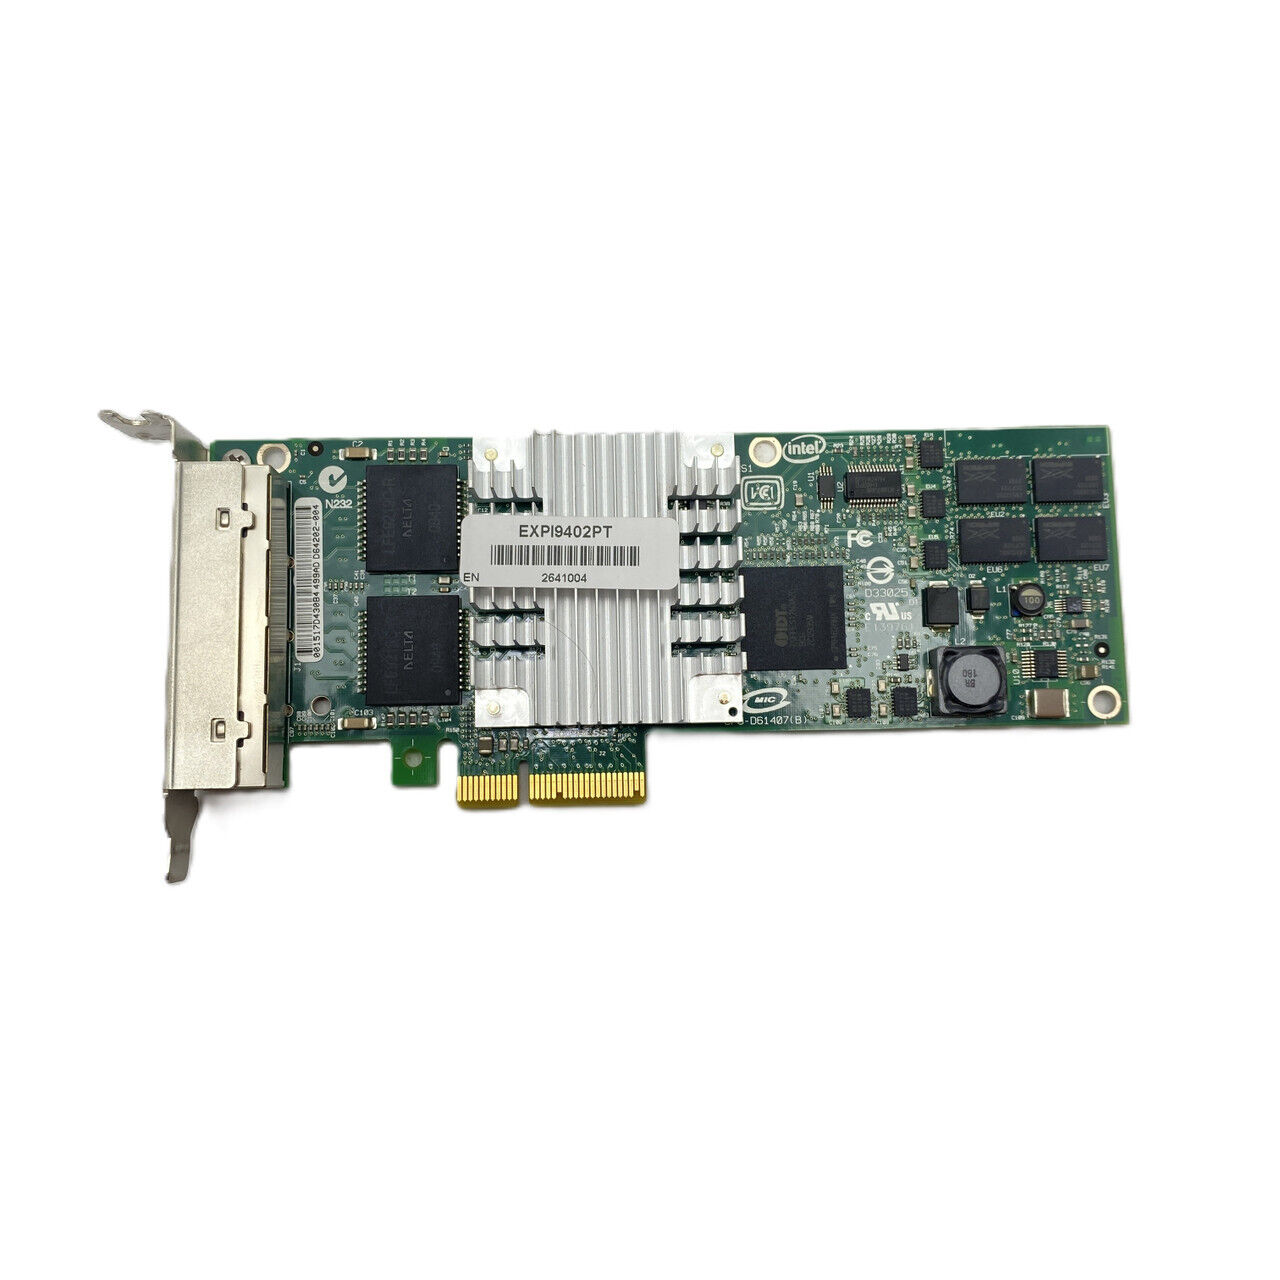 INTEL EXPI9402PT PRO/1000 PT 16GB DUAL PORT PCI-E SERVER ADAPTER